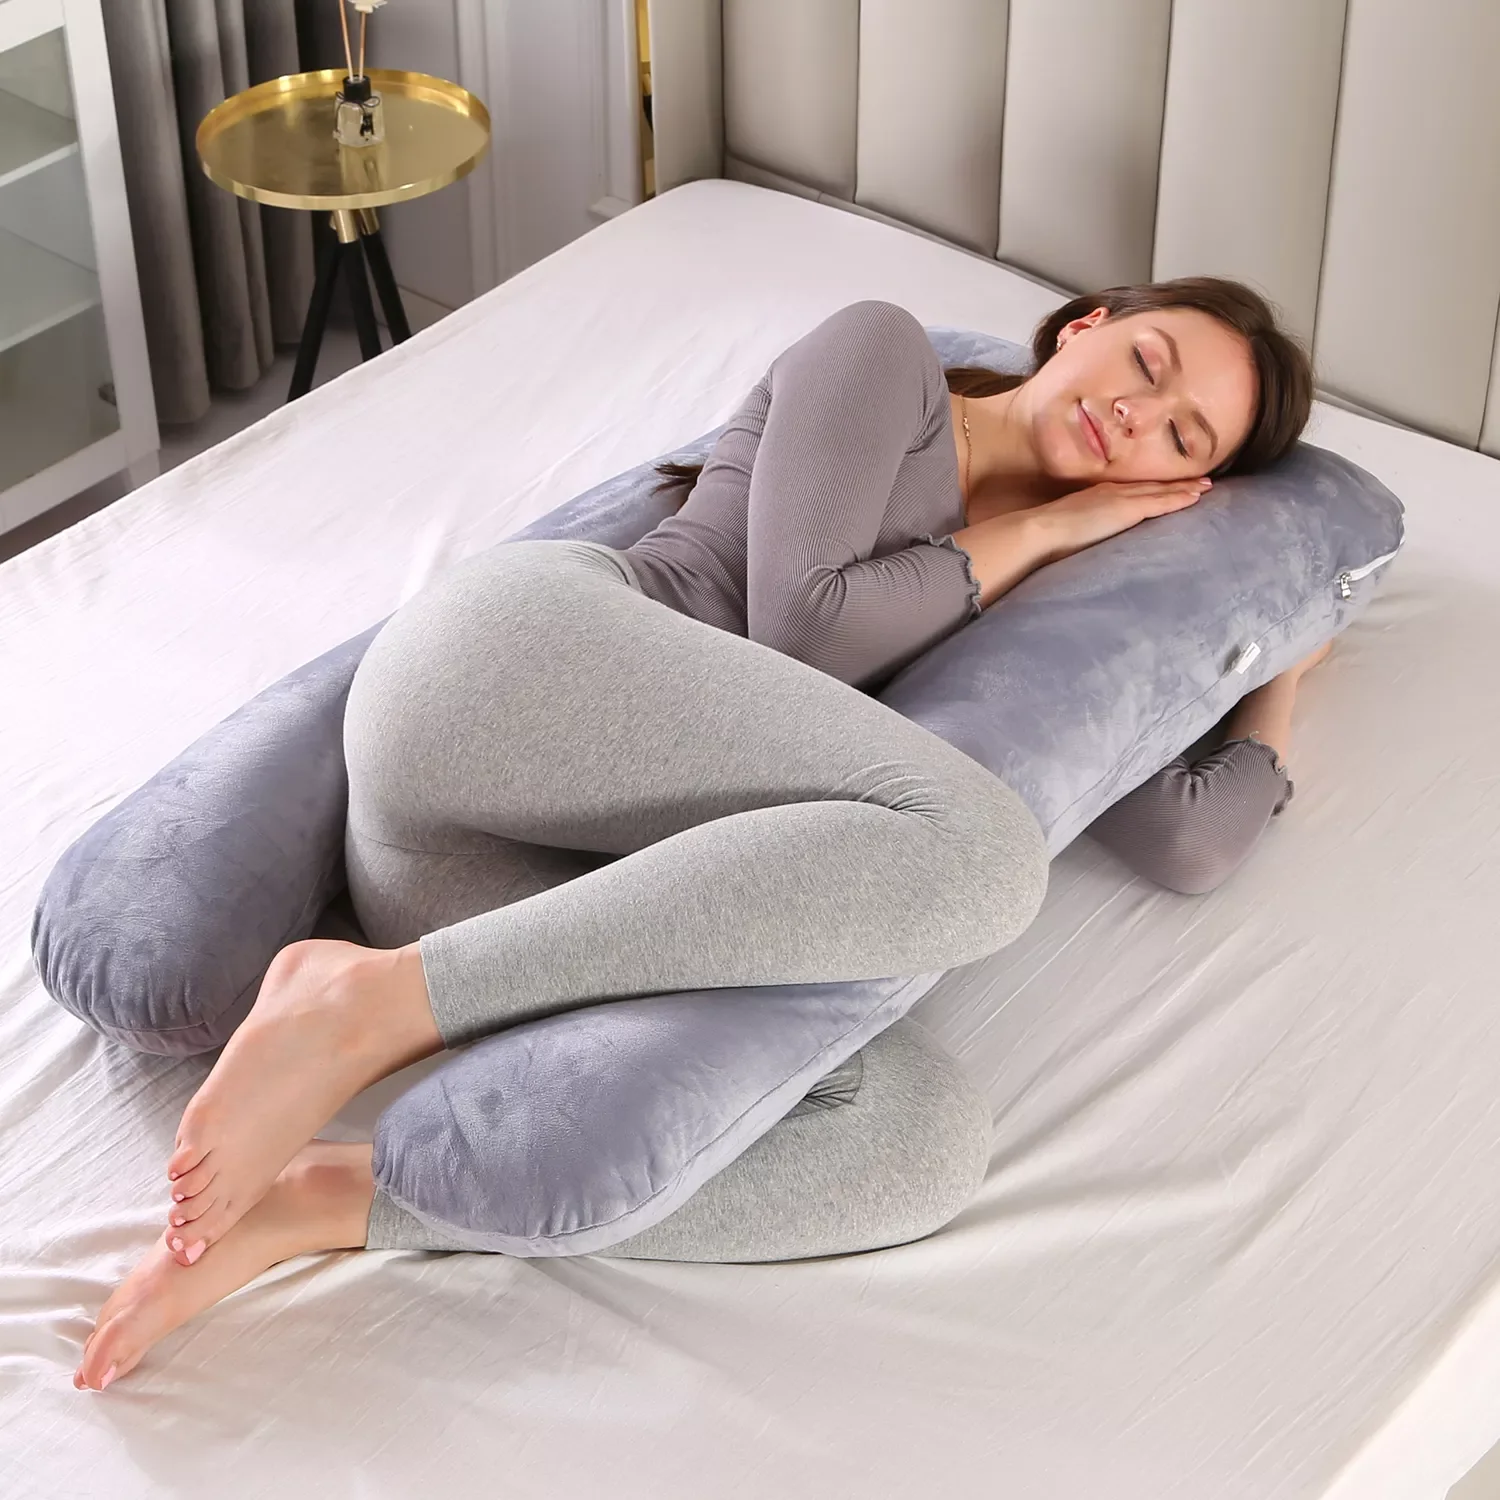 Shape Maternity Pillows Pregnancy Body Pillow Pregnant Women Side Sleepers Bedding Pillows Dropshipping